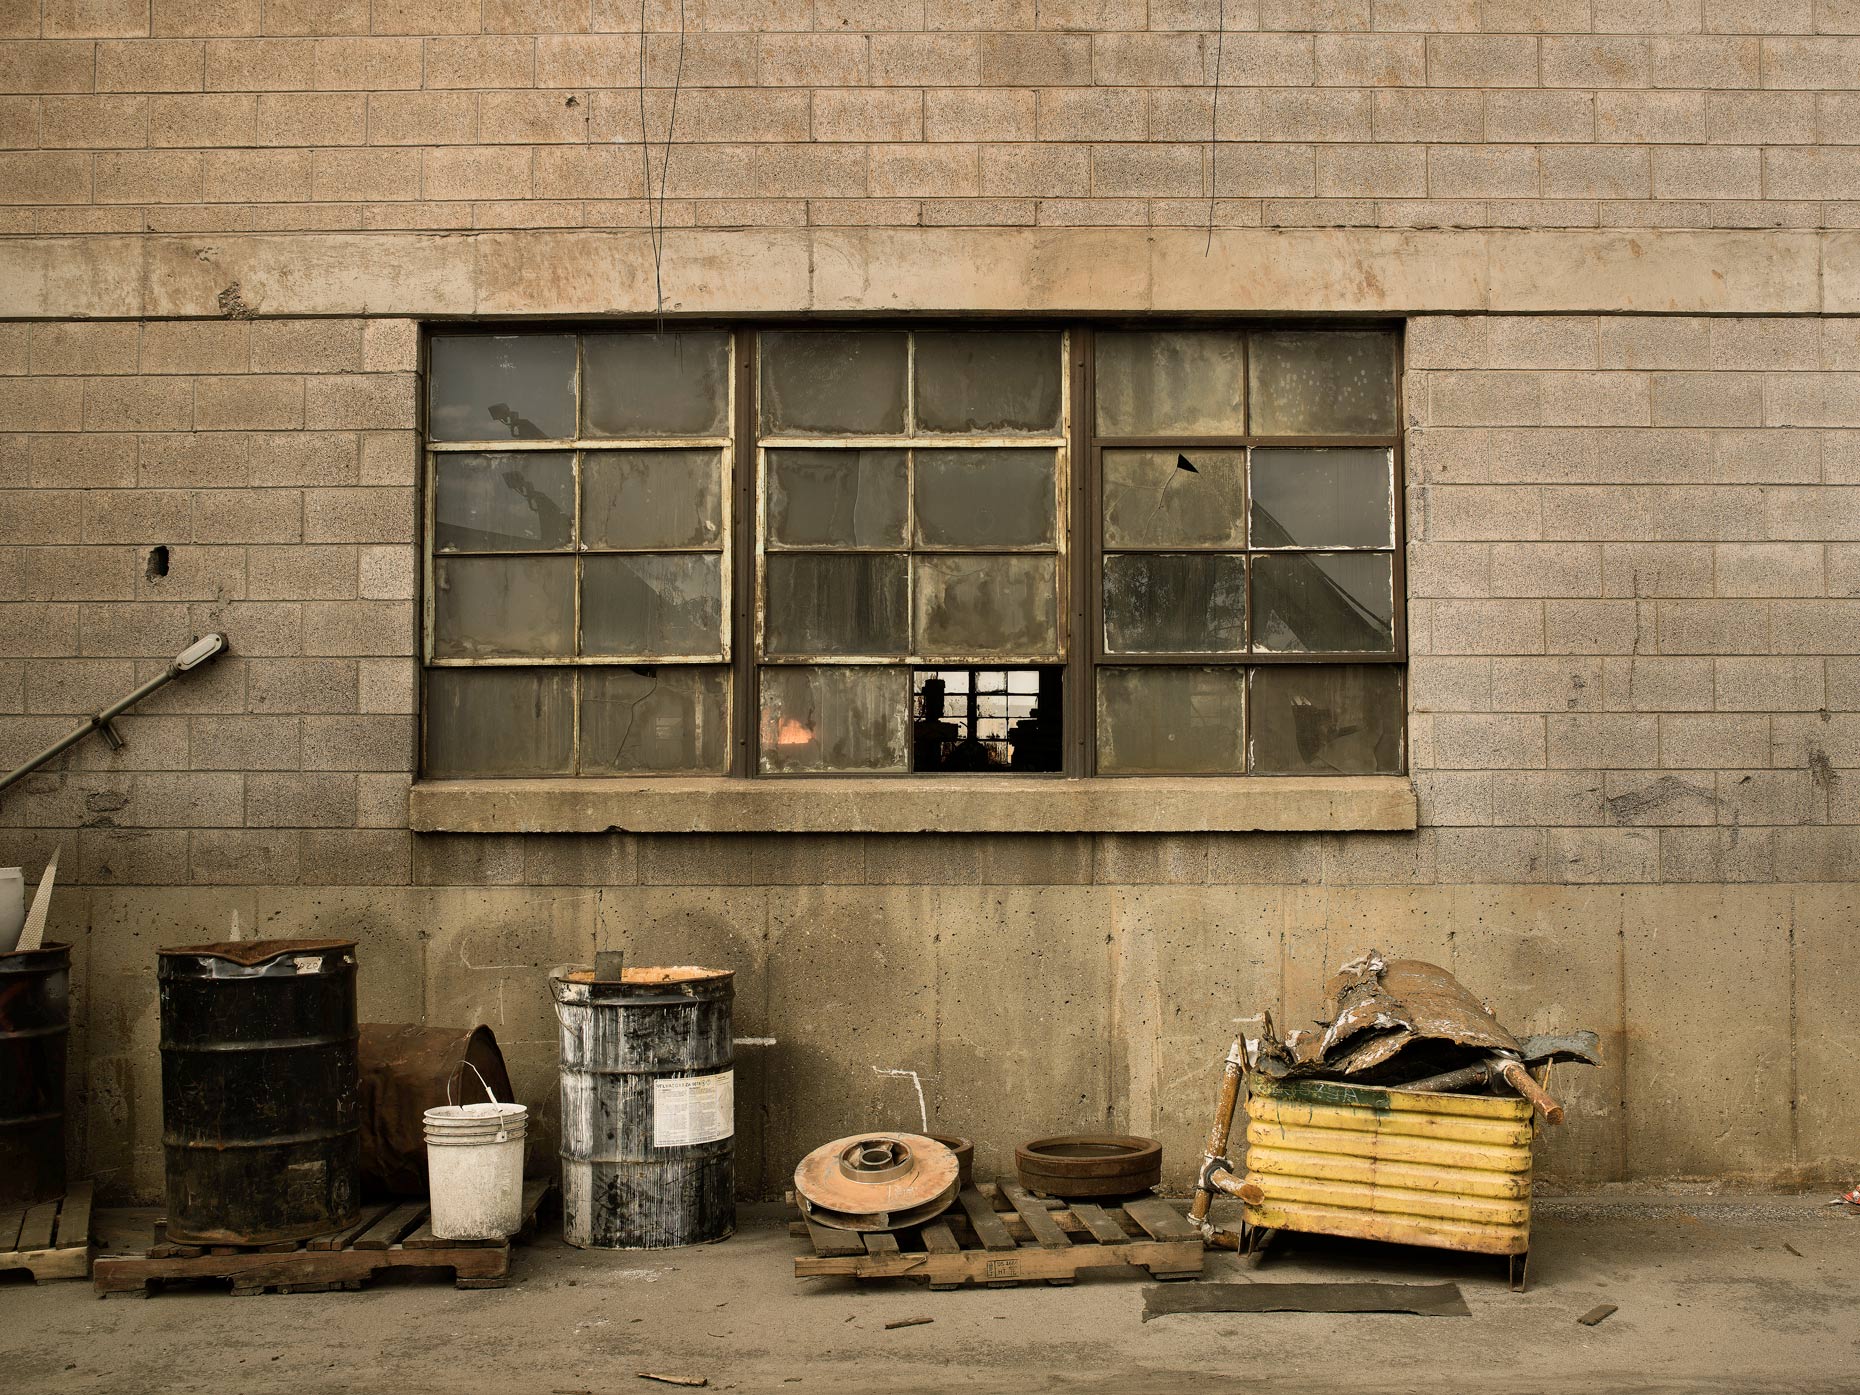 Projects-Editorial-Photography-Derek-Israelsen-006-Broken_Window.jpg